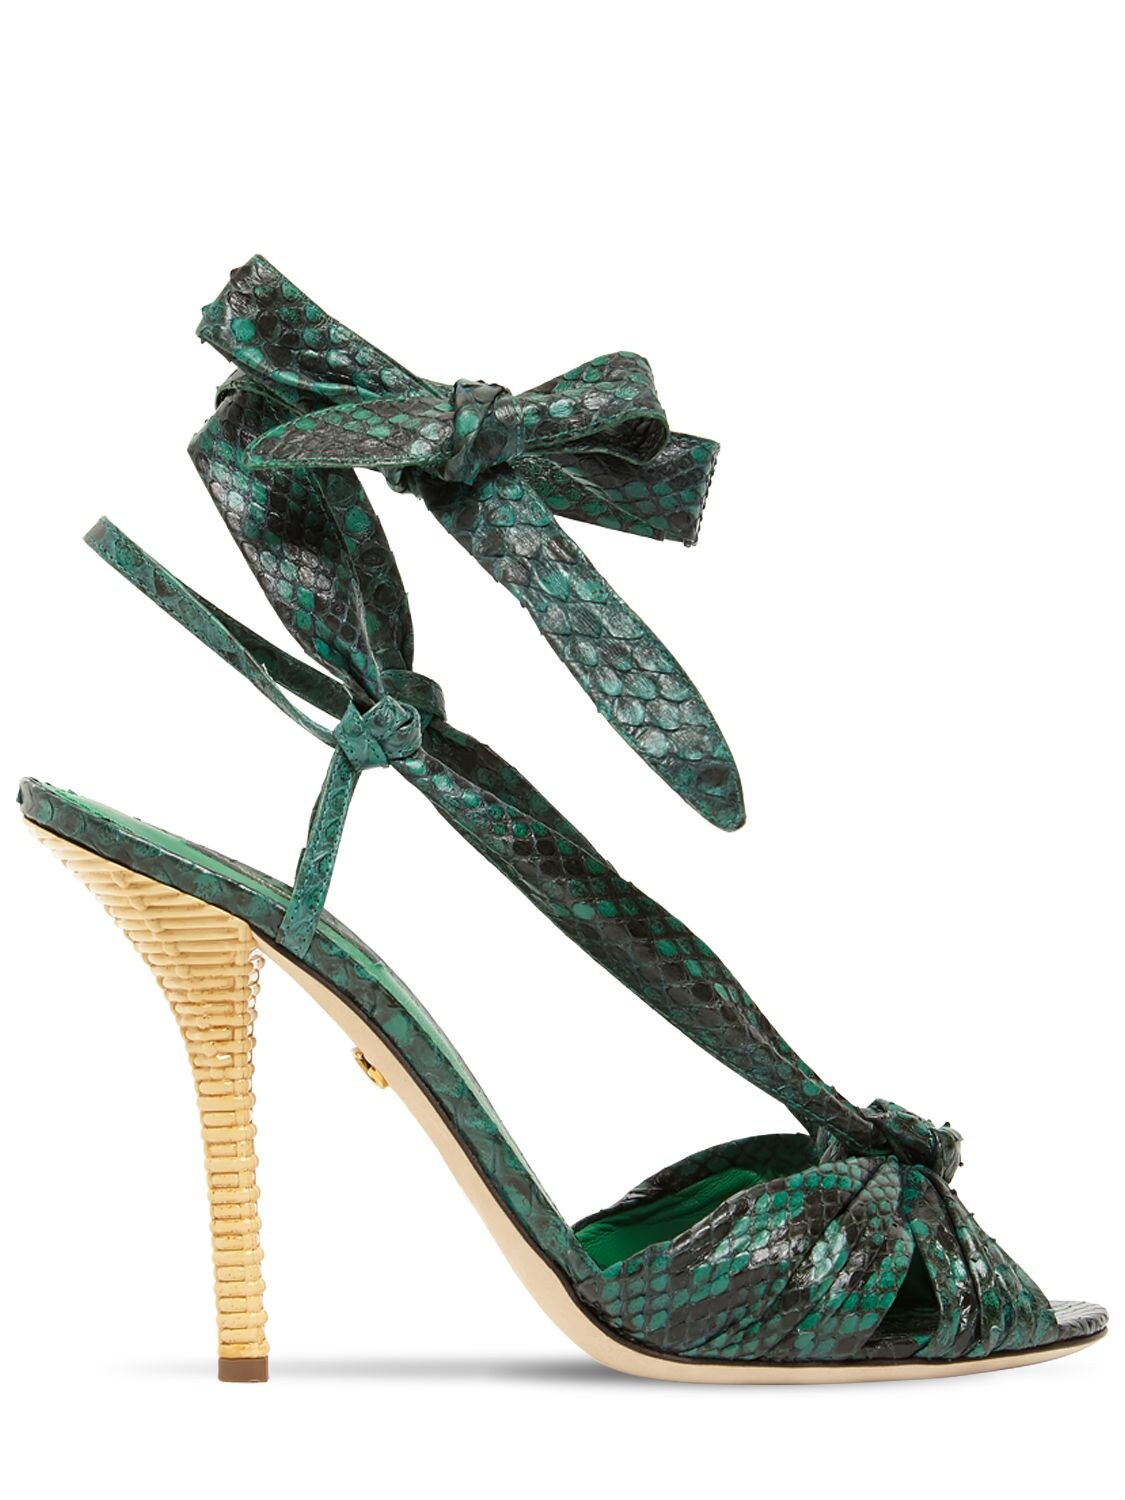 Dolce & Gabbana 105mm Snake Skin Lace-up Sandals